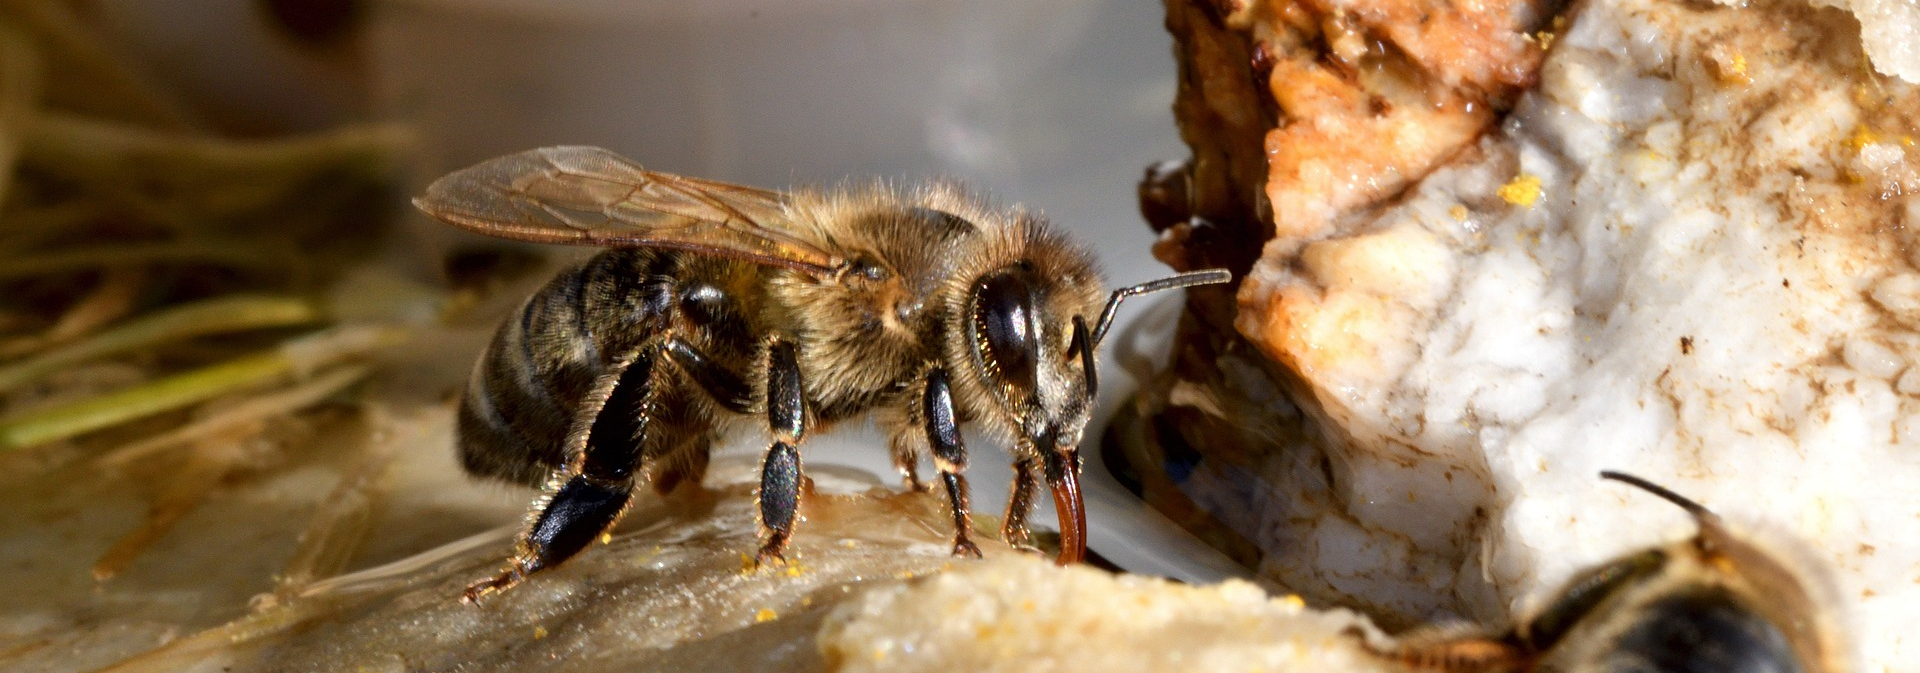 honeybee drinking